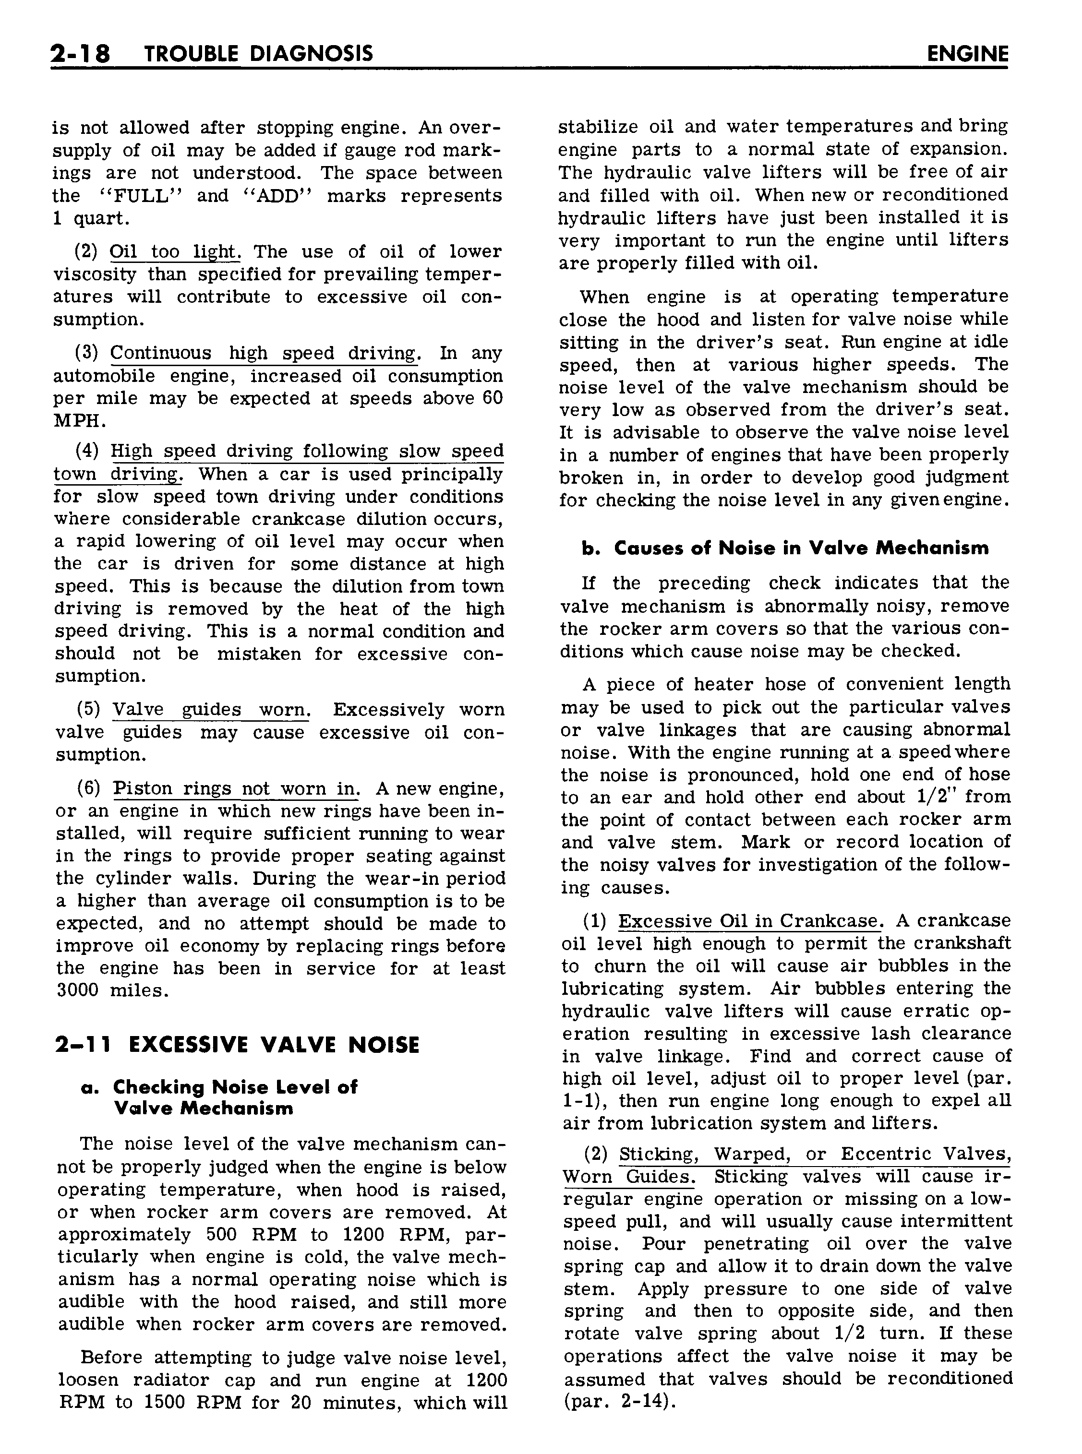 n_03 1961 Buick Shop Manual - Engine-018-018.jpg